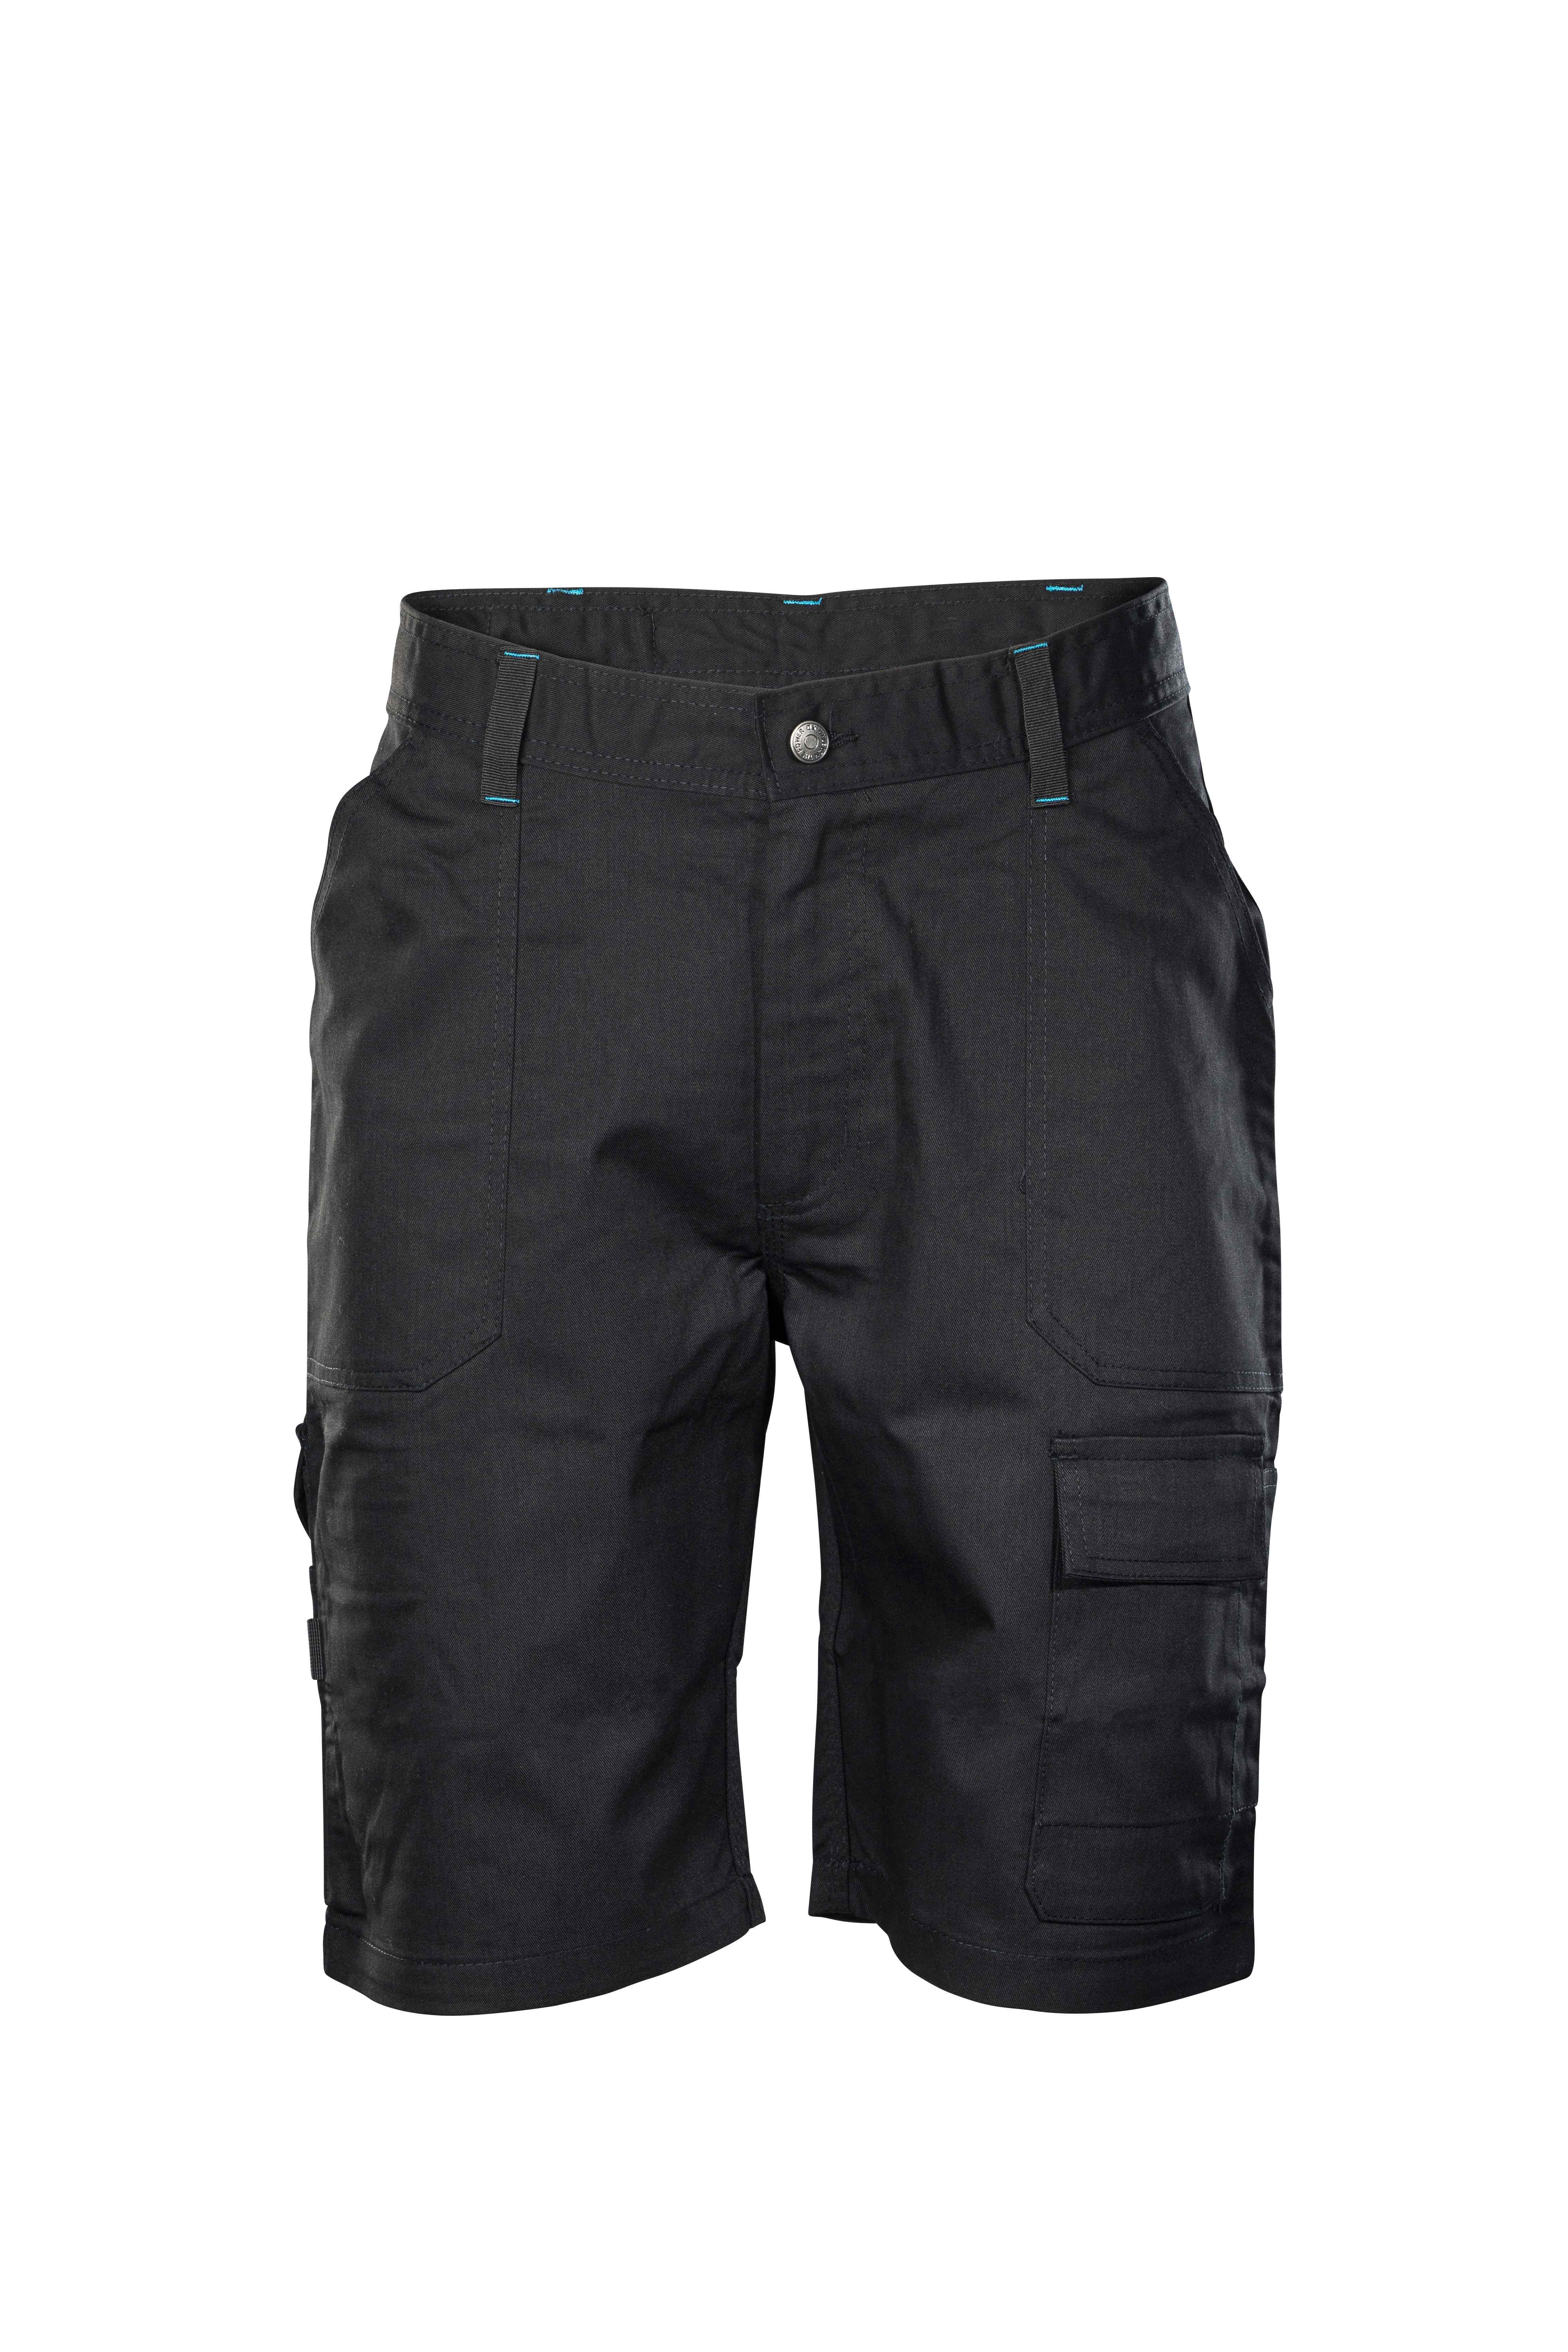 OX Multi Pocket Trade Shorts 34